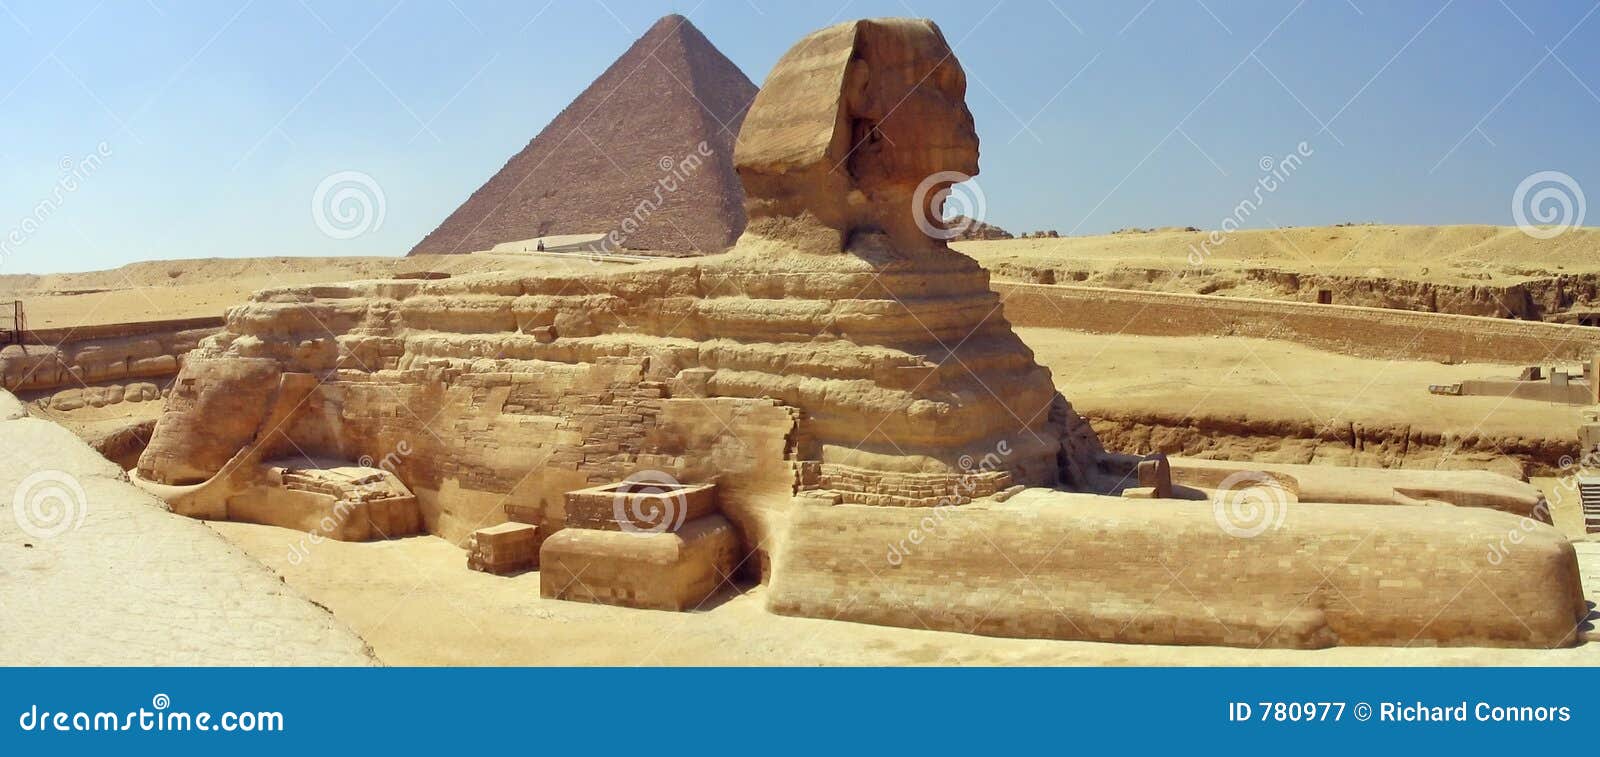 great sphinx, great pyramid. giza, egypt.